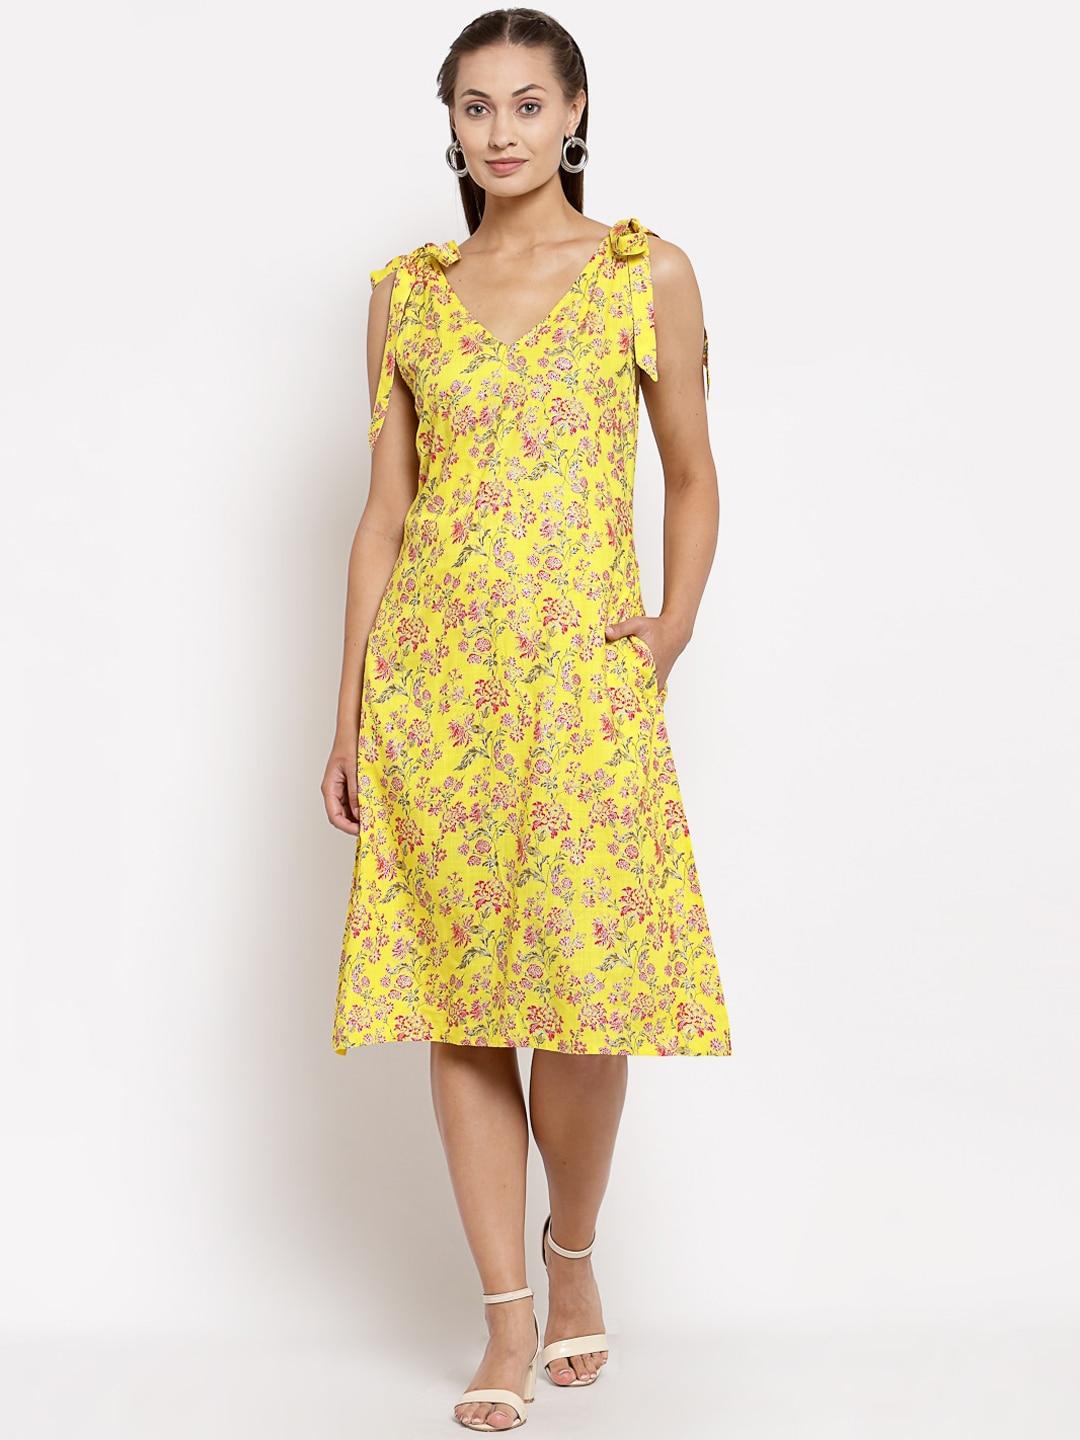 Myshka Yellow Floral Printed A-Line Dress